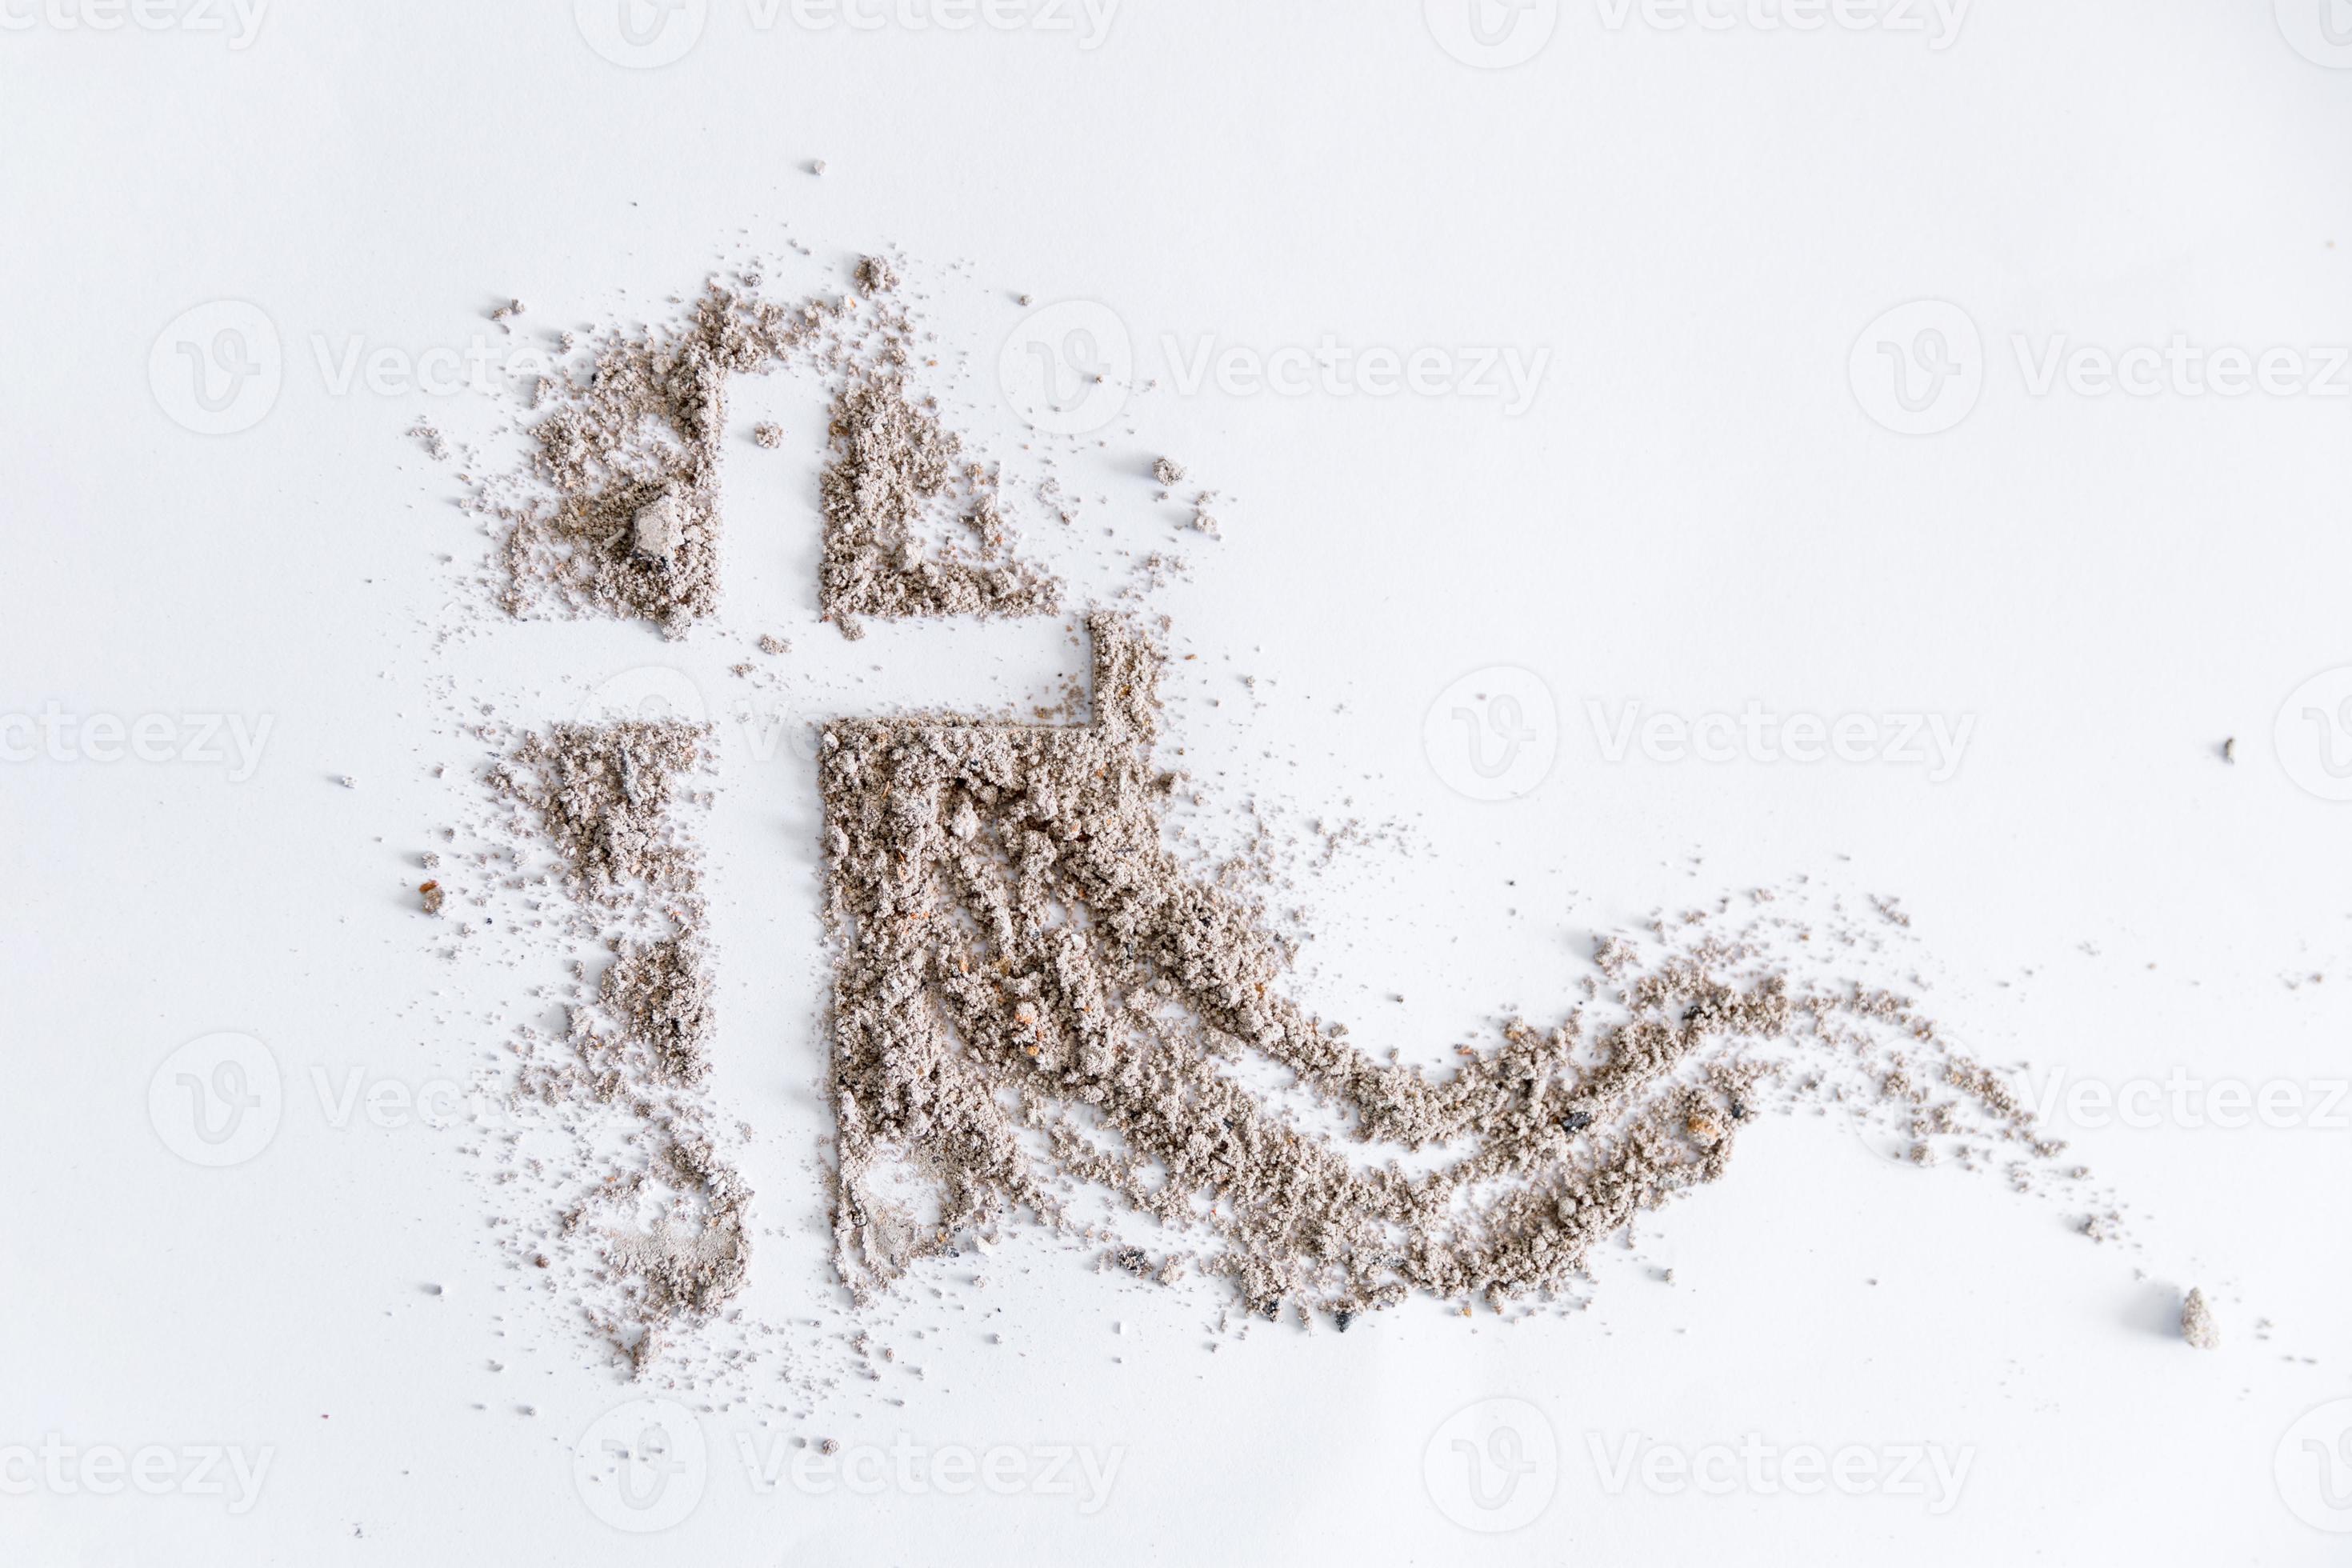 christen kruis of kruisbeeld tekening in as, stof zand net zo symbool van geloof, offer, Jezus Christus, as woensdag, uitgeleend, zo vrijdag, Pasen met kerk is gewijd naar vastend